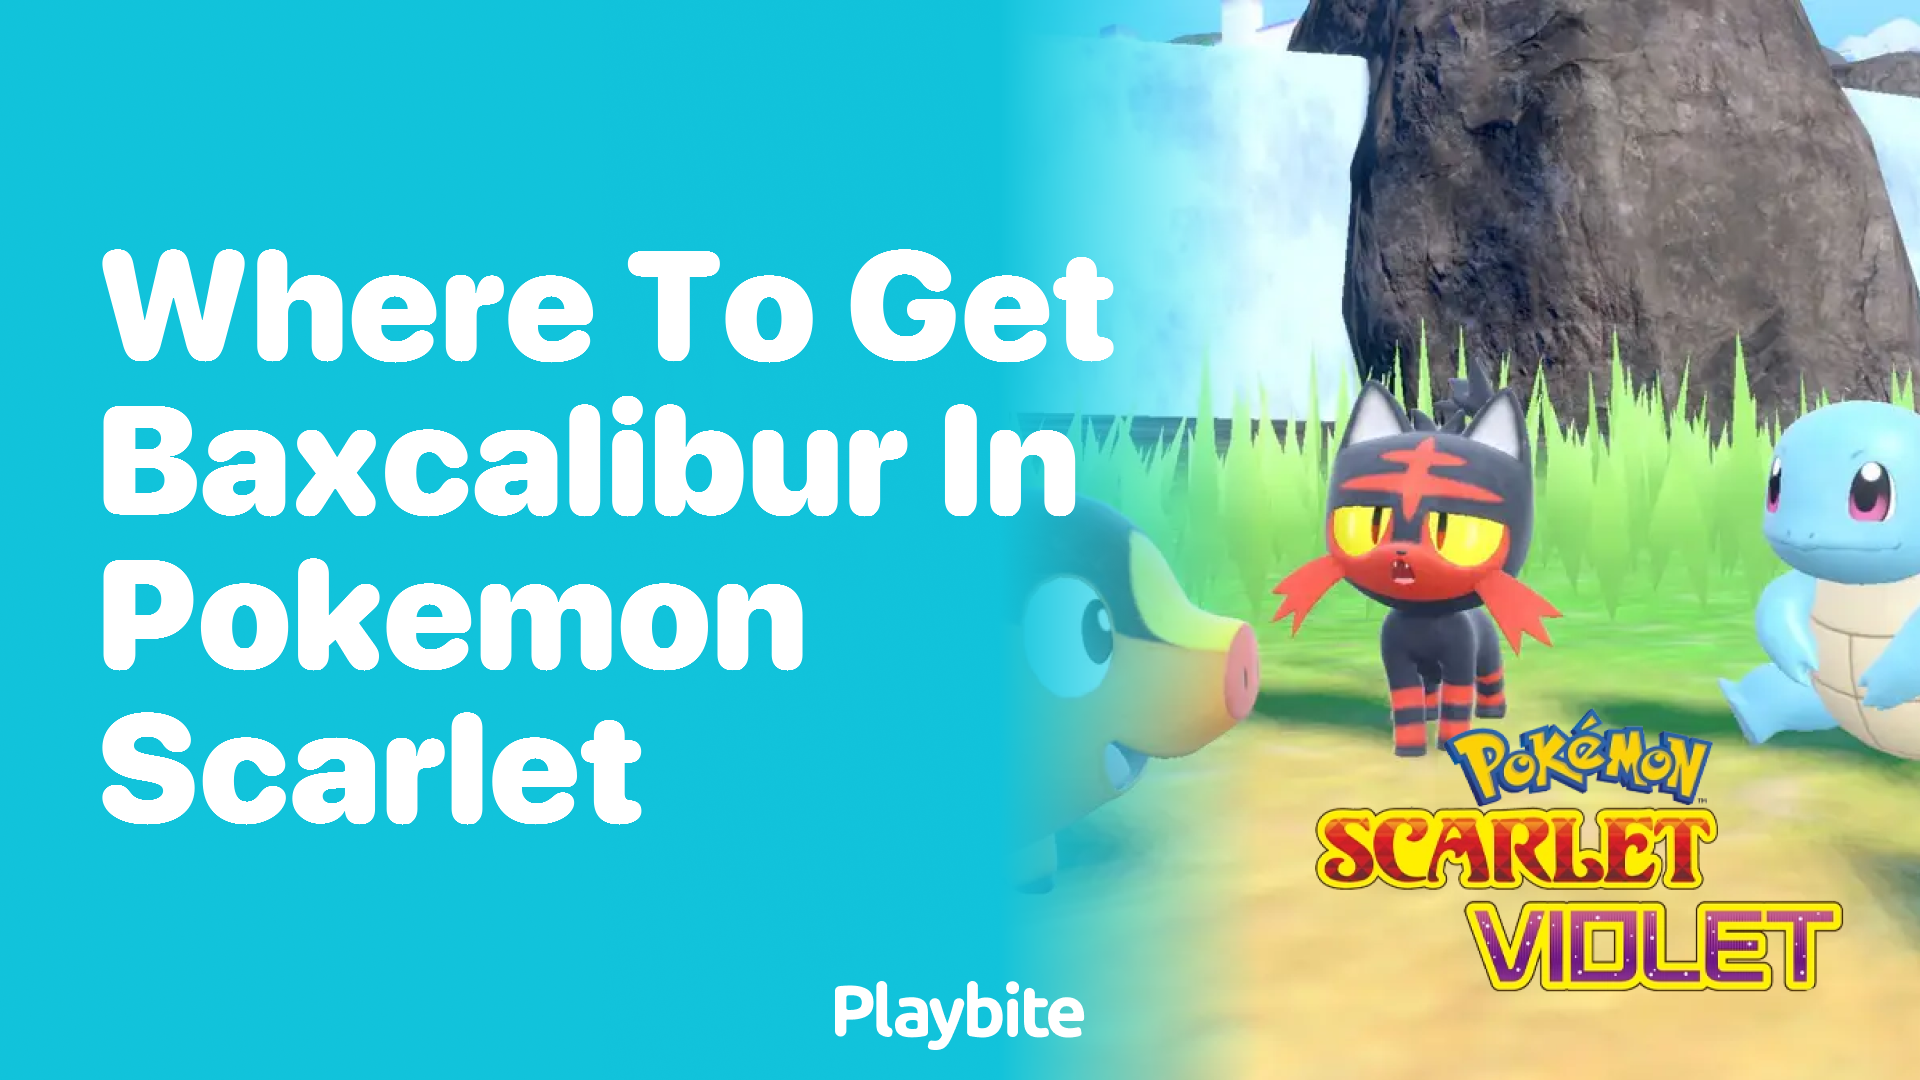 Where to get Baxcalibur in Pokemon Scarlet